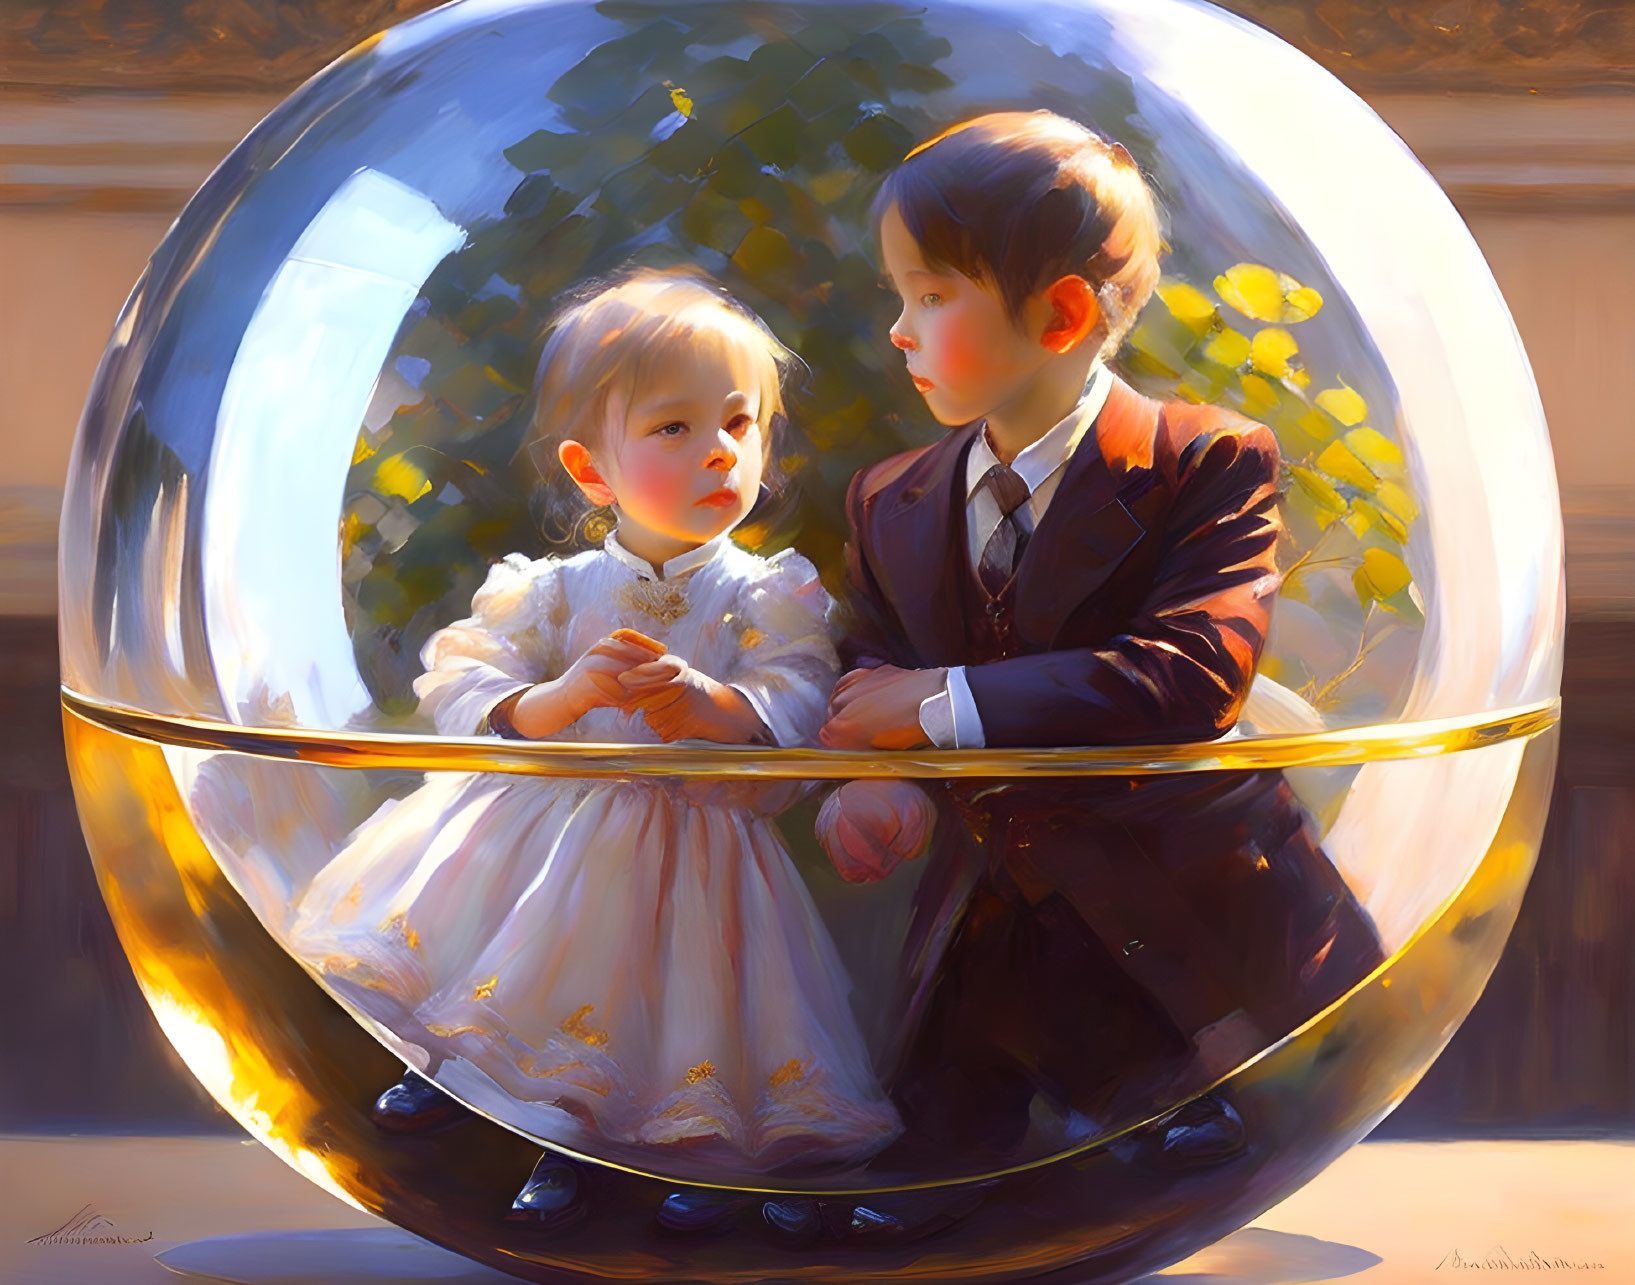 Children in formal attire inside transparent sphere with warm backdrop